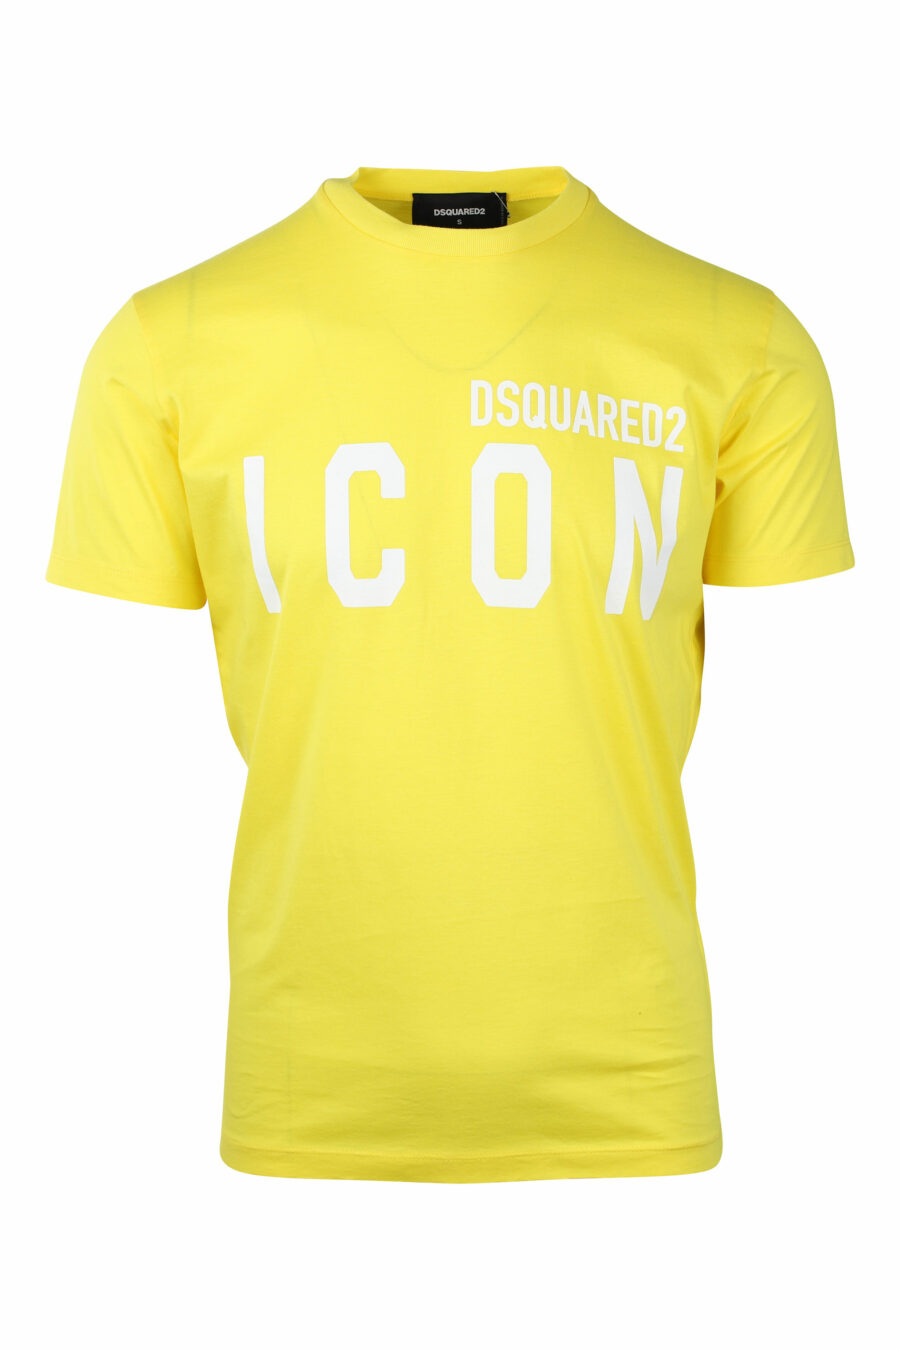 Yellow T-shirt with white double "icon" logo - IMG 1404